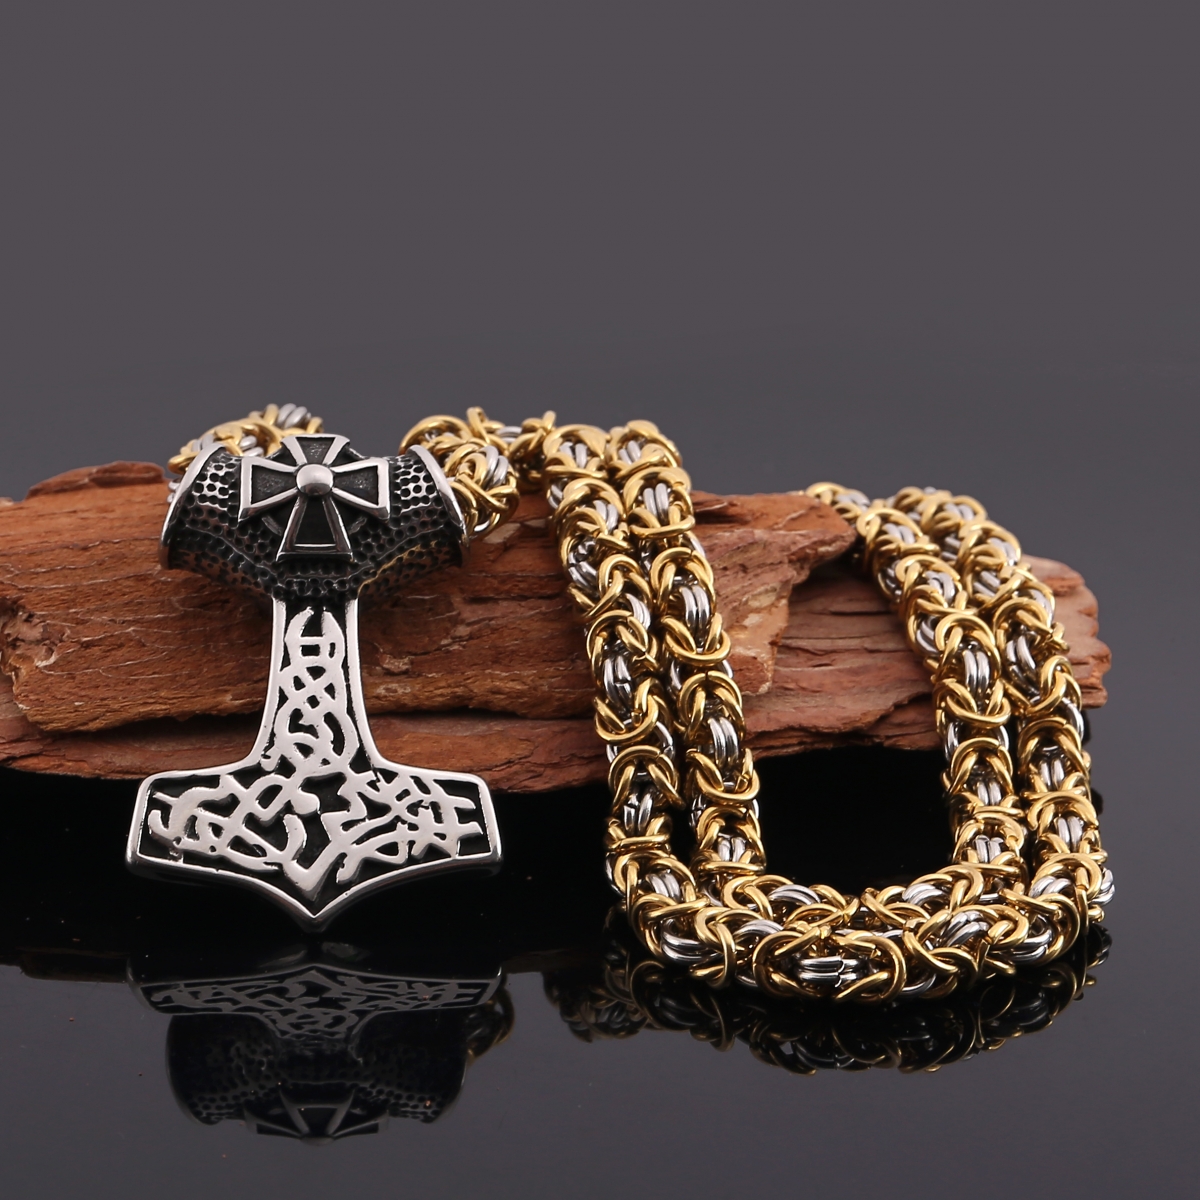 Giant Mjolnir Necklace US$11/PC-NORSECOLLECTION- Viking Jewelry,Viking Necklace,Viking Bracelet,Viking Rings,Viking Mugs,Viking Accessories,Viking Crafts